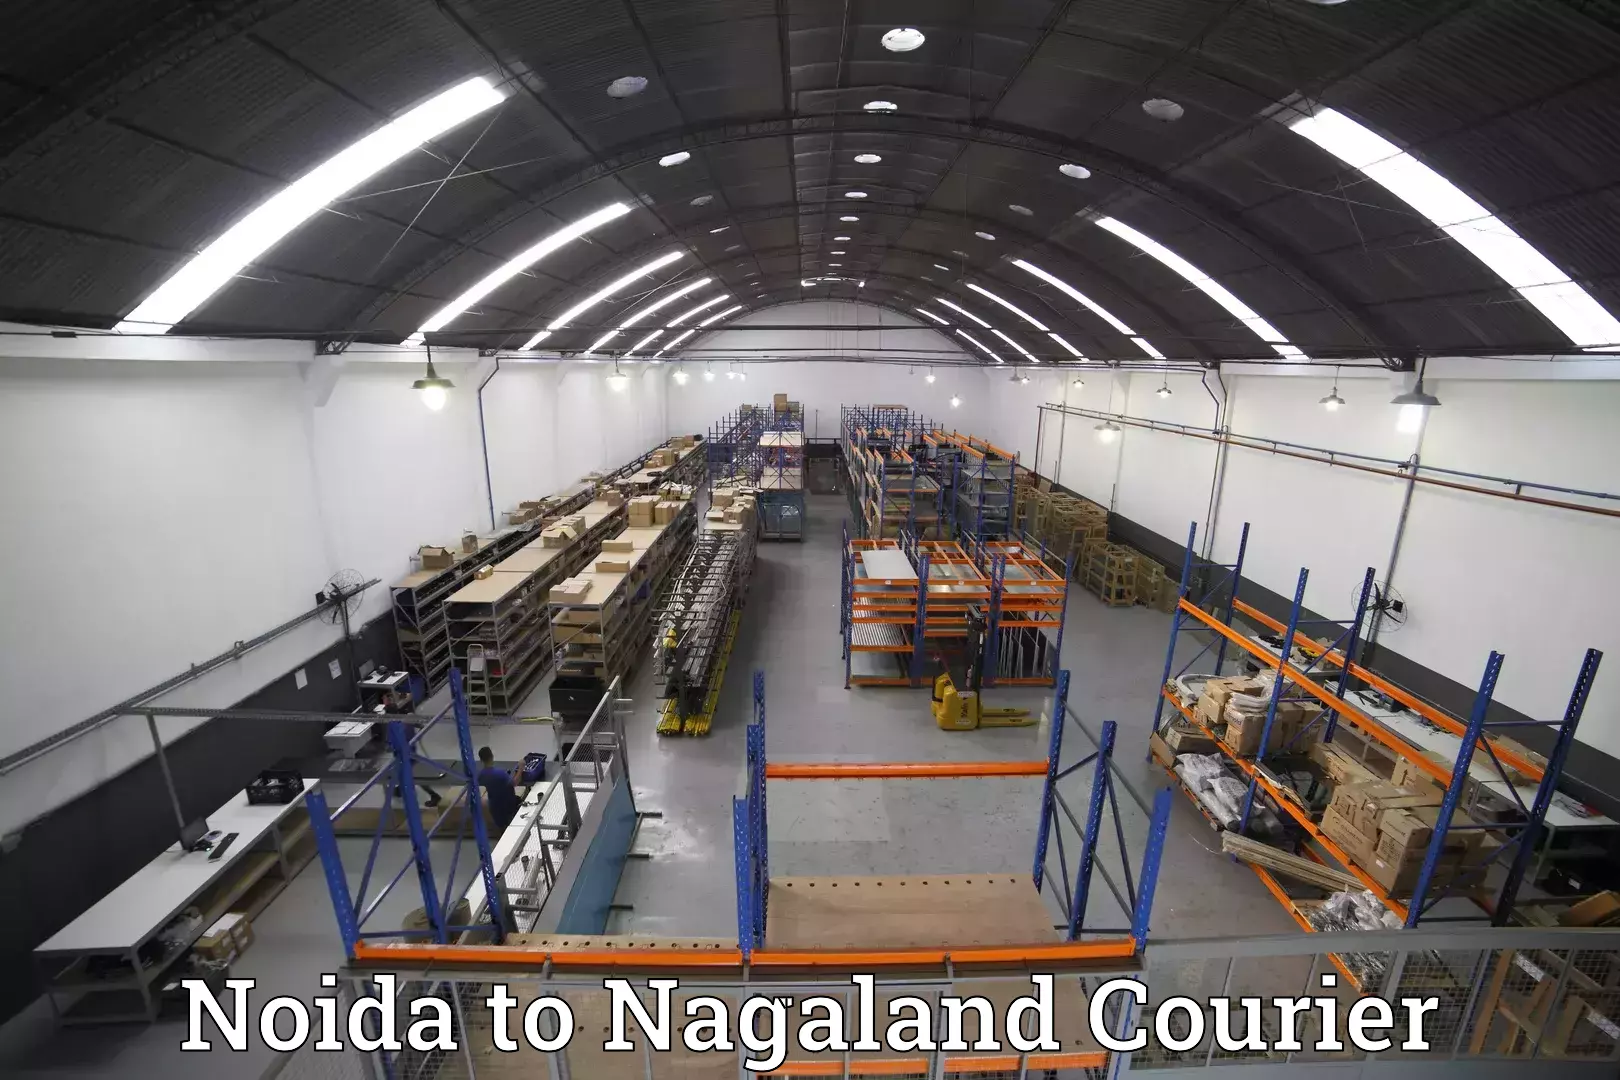 Doorstep luggage collection Noida to Nagaland